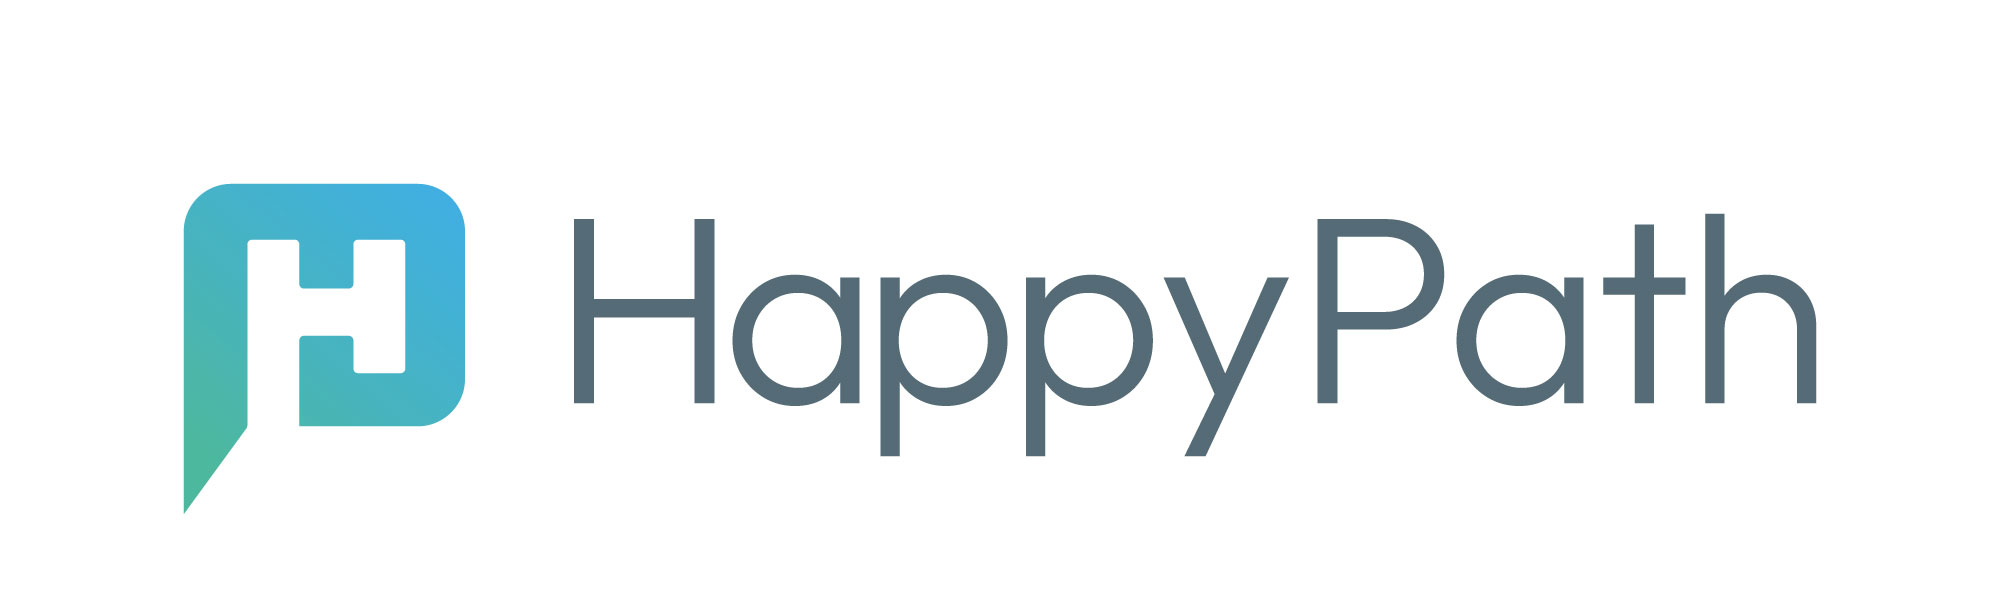 HappyPath Labs 